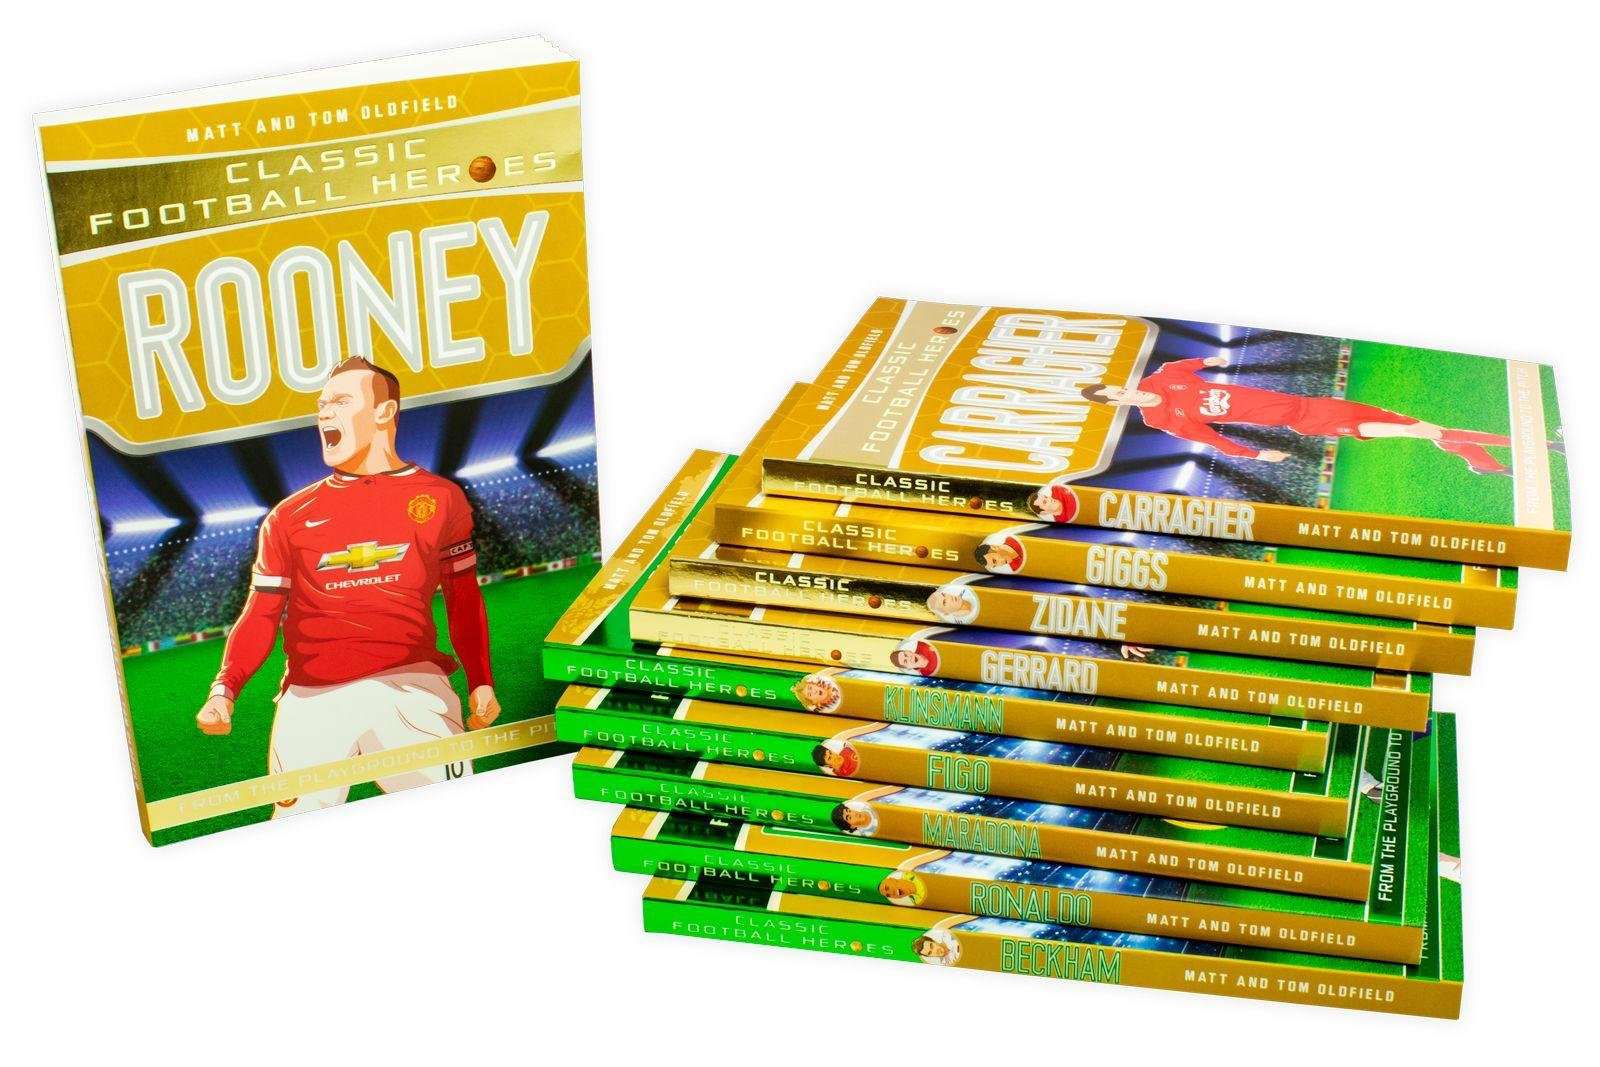 Classic Football Heroes Legend 10 Books Children Set Paperback By Matt & Tom - St Stephens Books